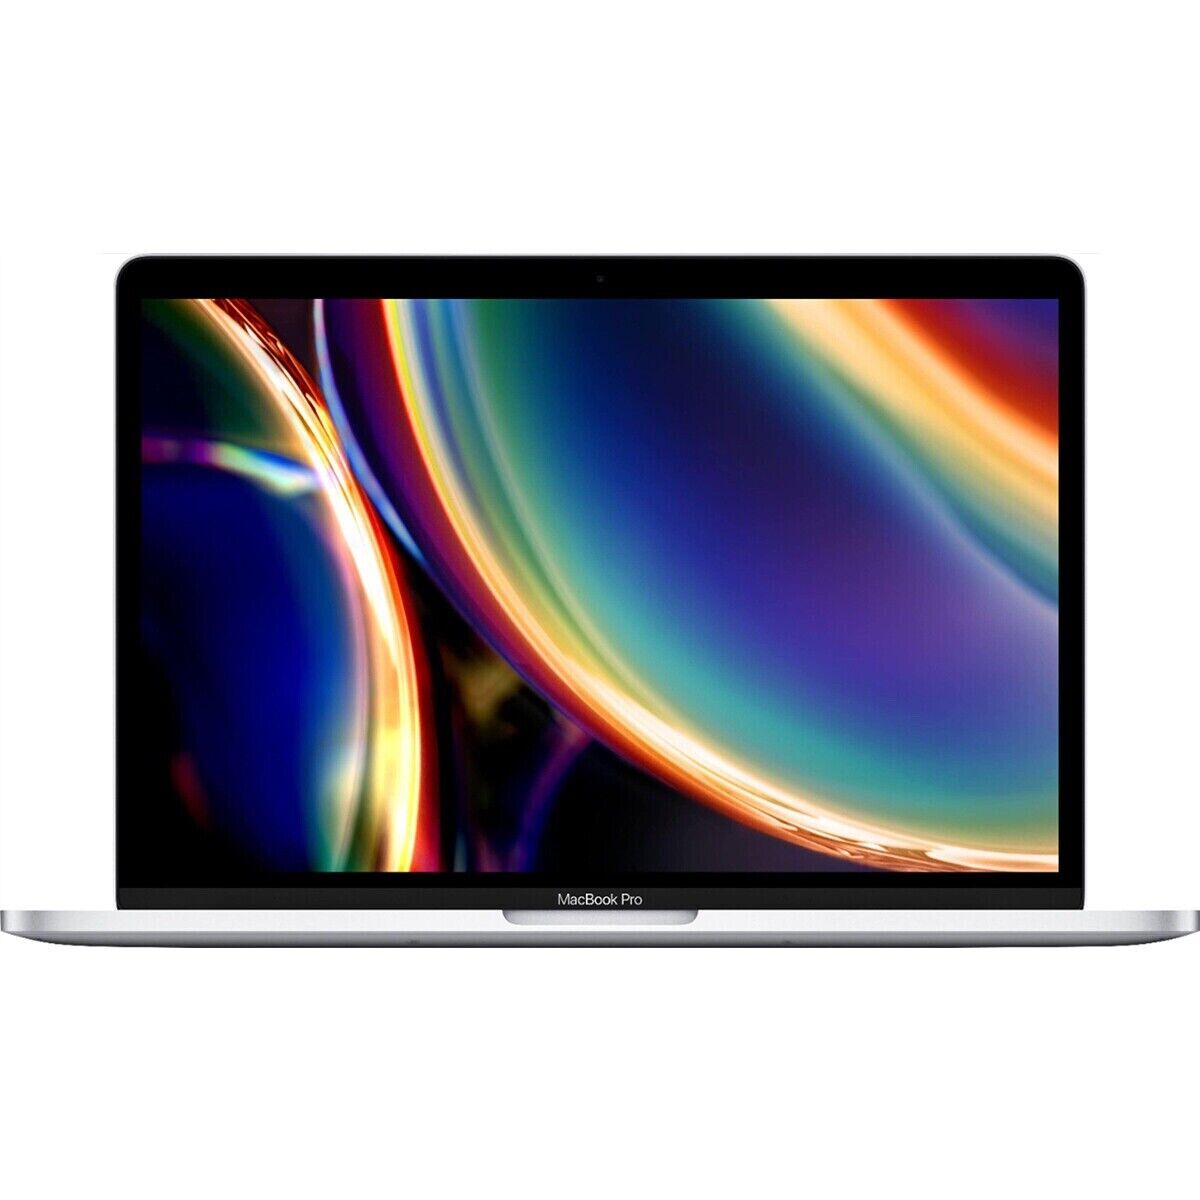 Apple MacBook Pro 13 Inch 2.4 GHz i5 256GB SSD 8GB RAM 2019 Touch Bar A1989